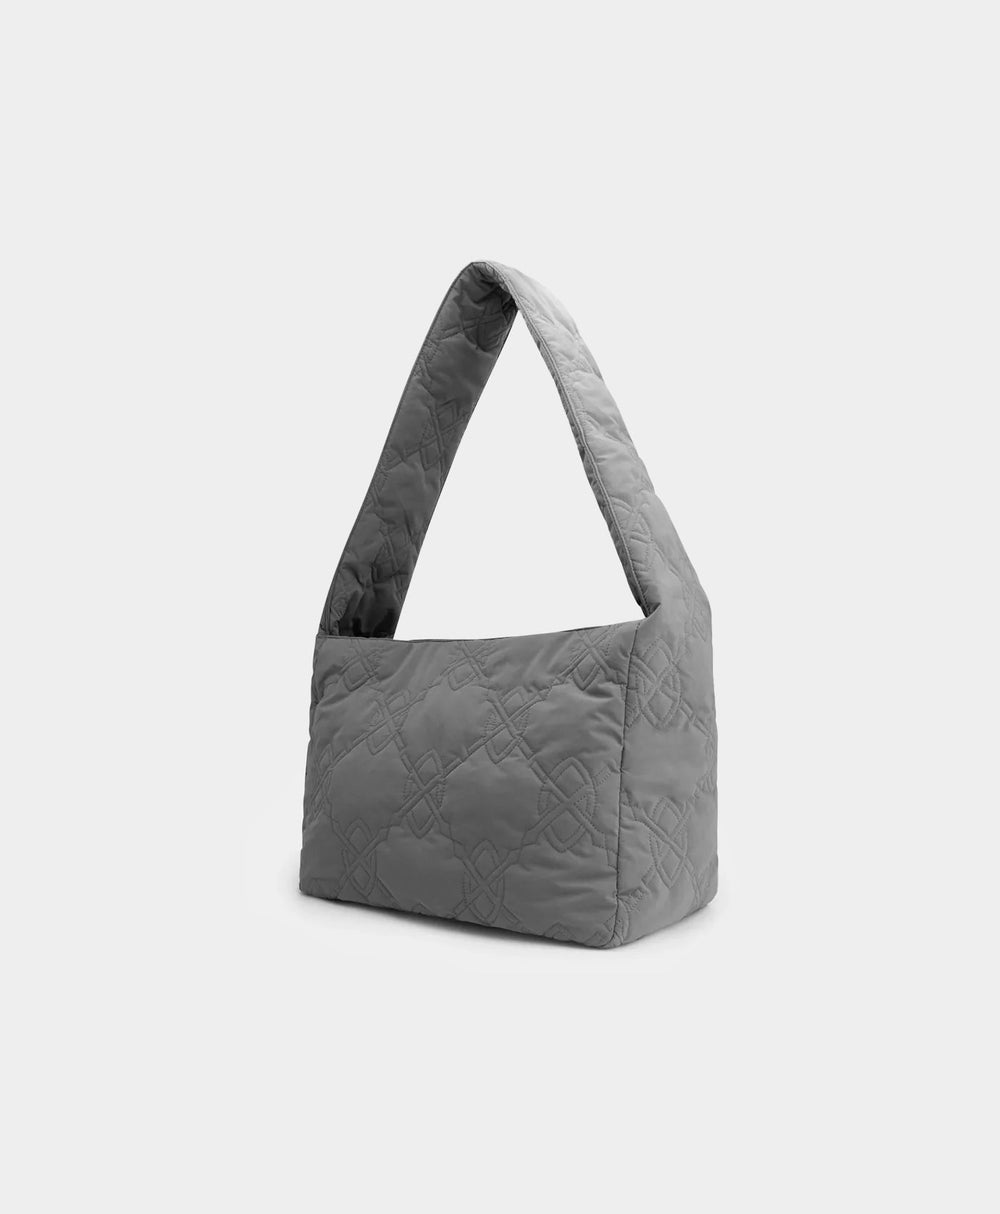 DP - Magnet Grey Noto Bag - Packshot - Rear